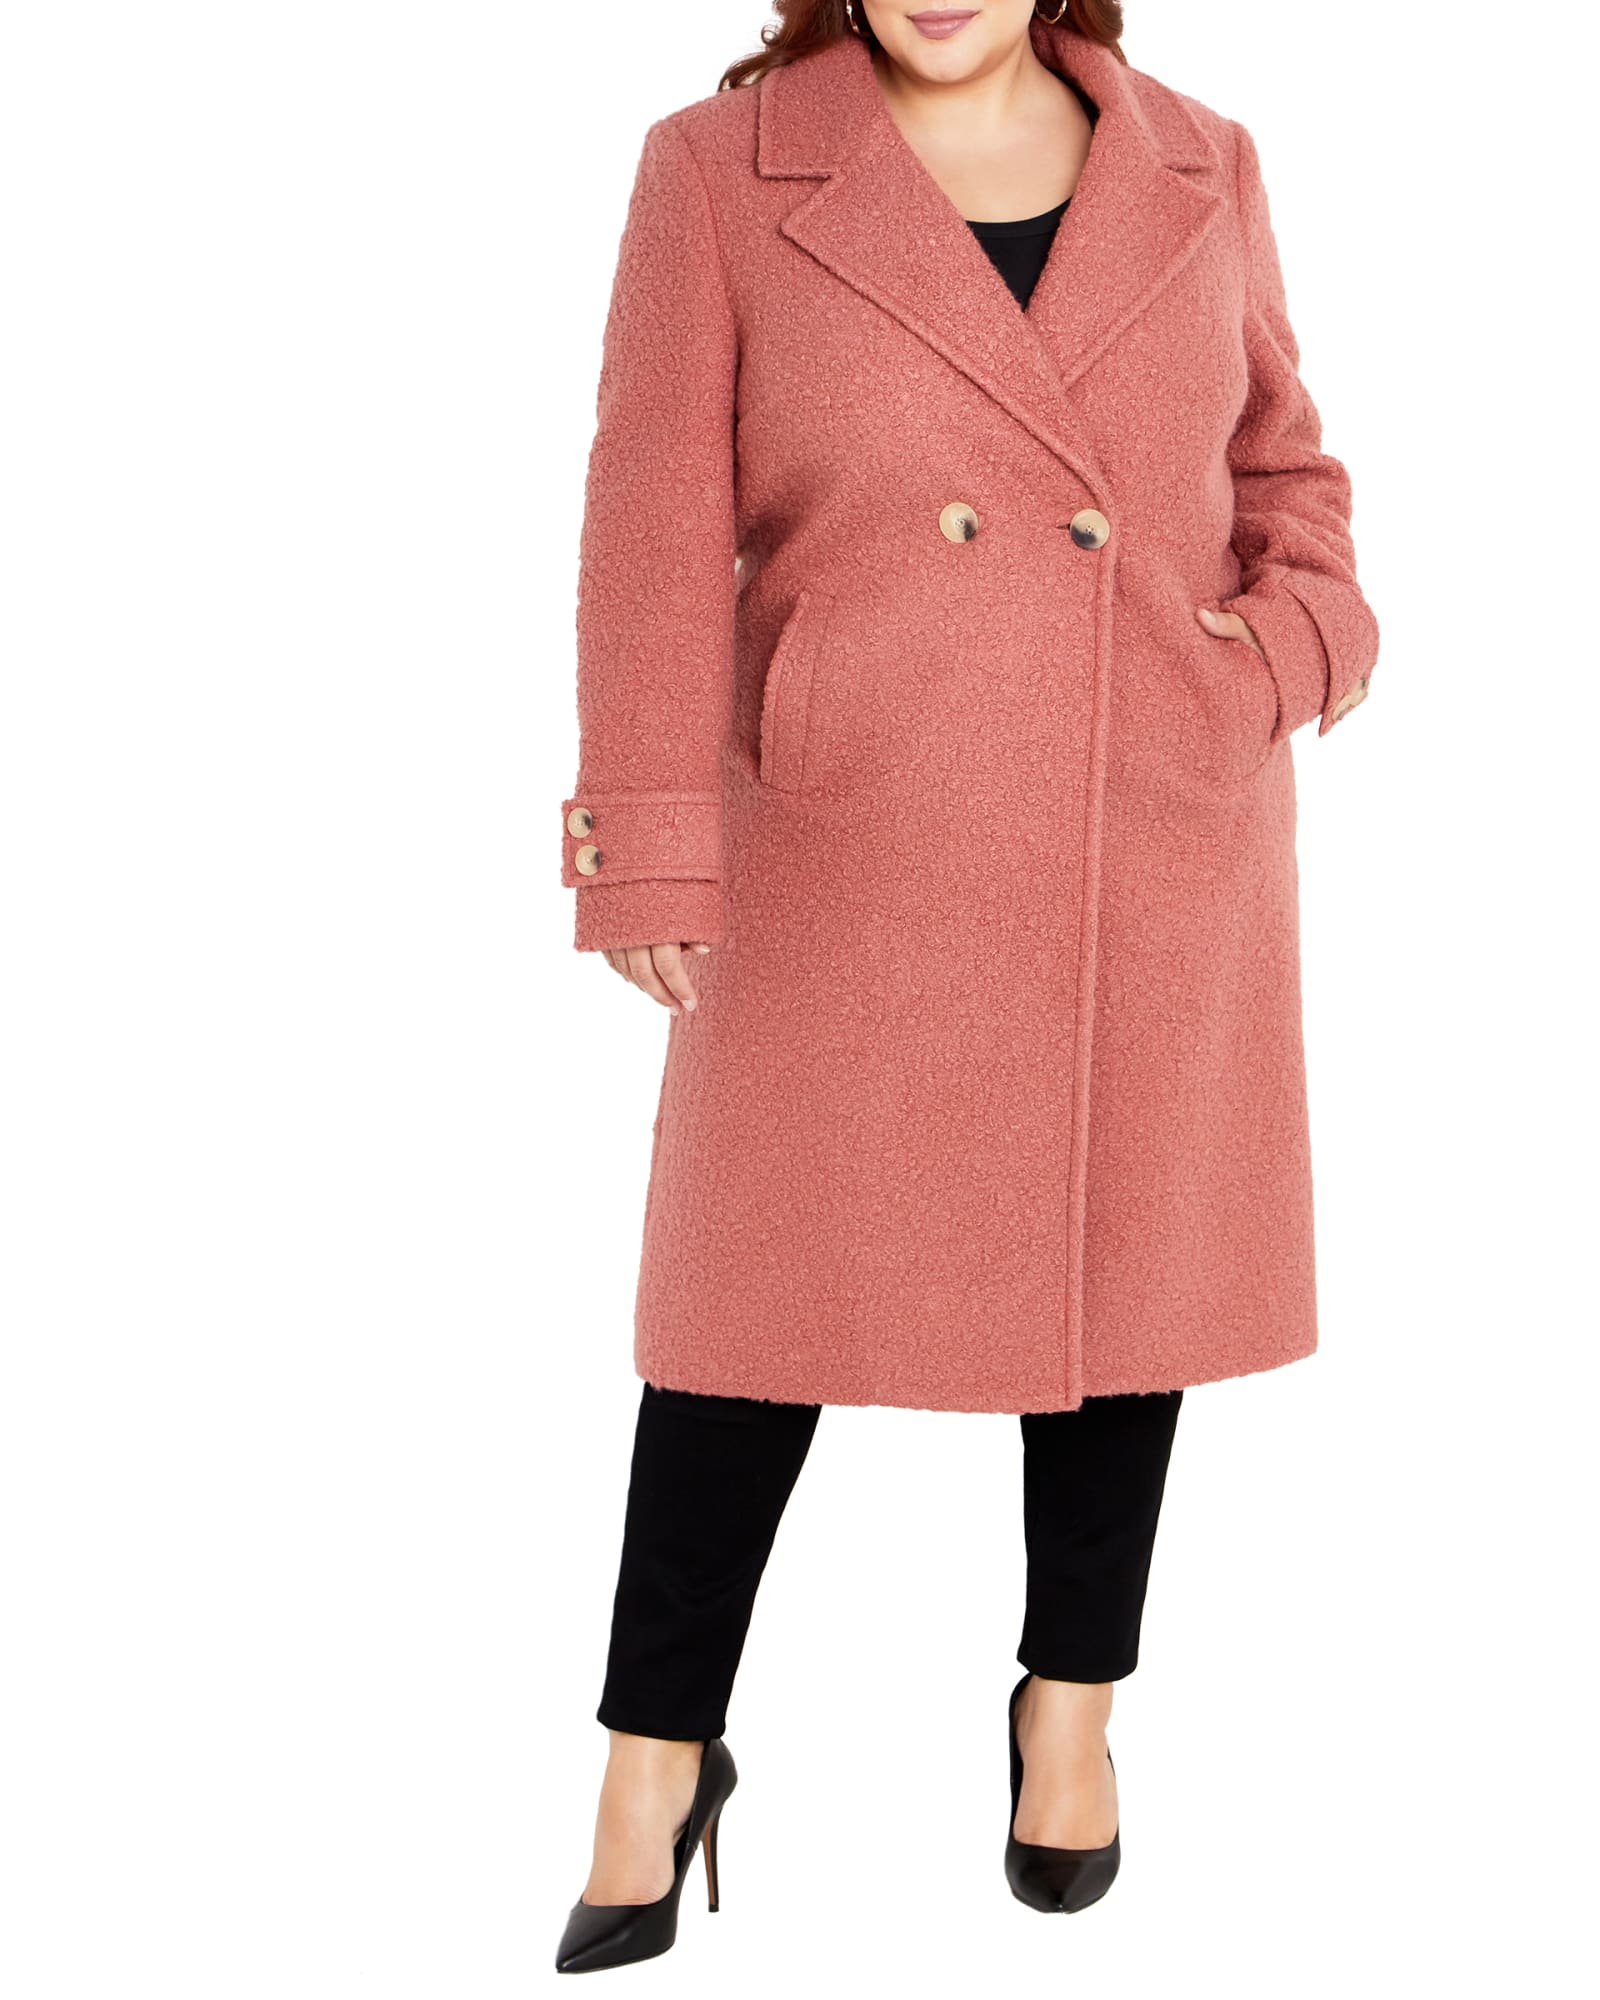 Winter Coats Size 4x